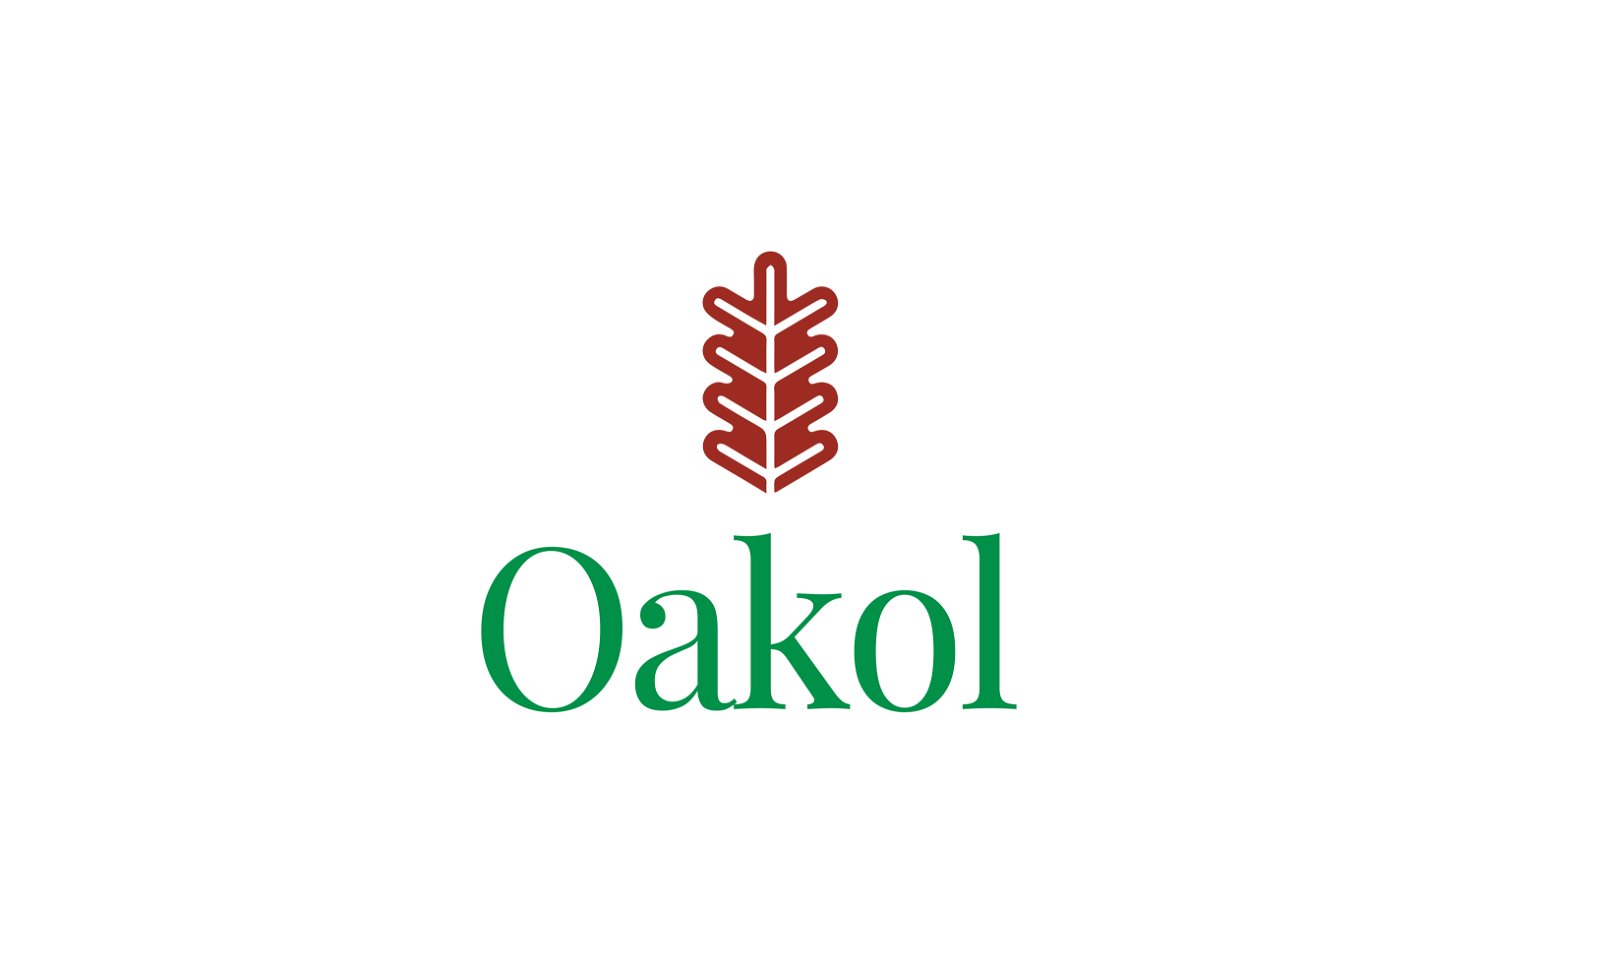 Oakol.com - Creative brandable domain for sale